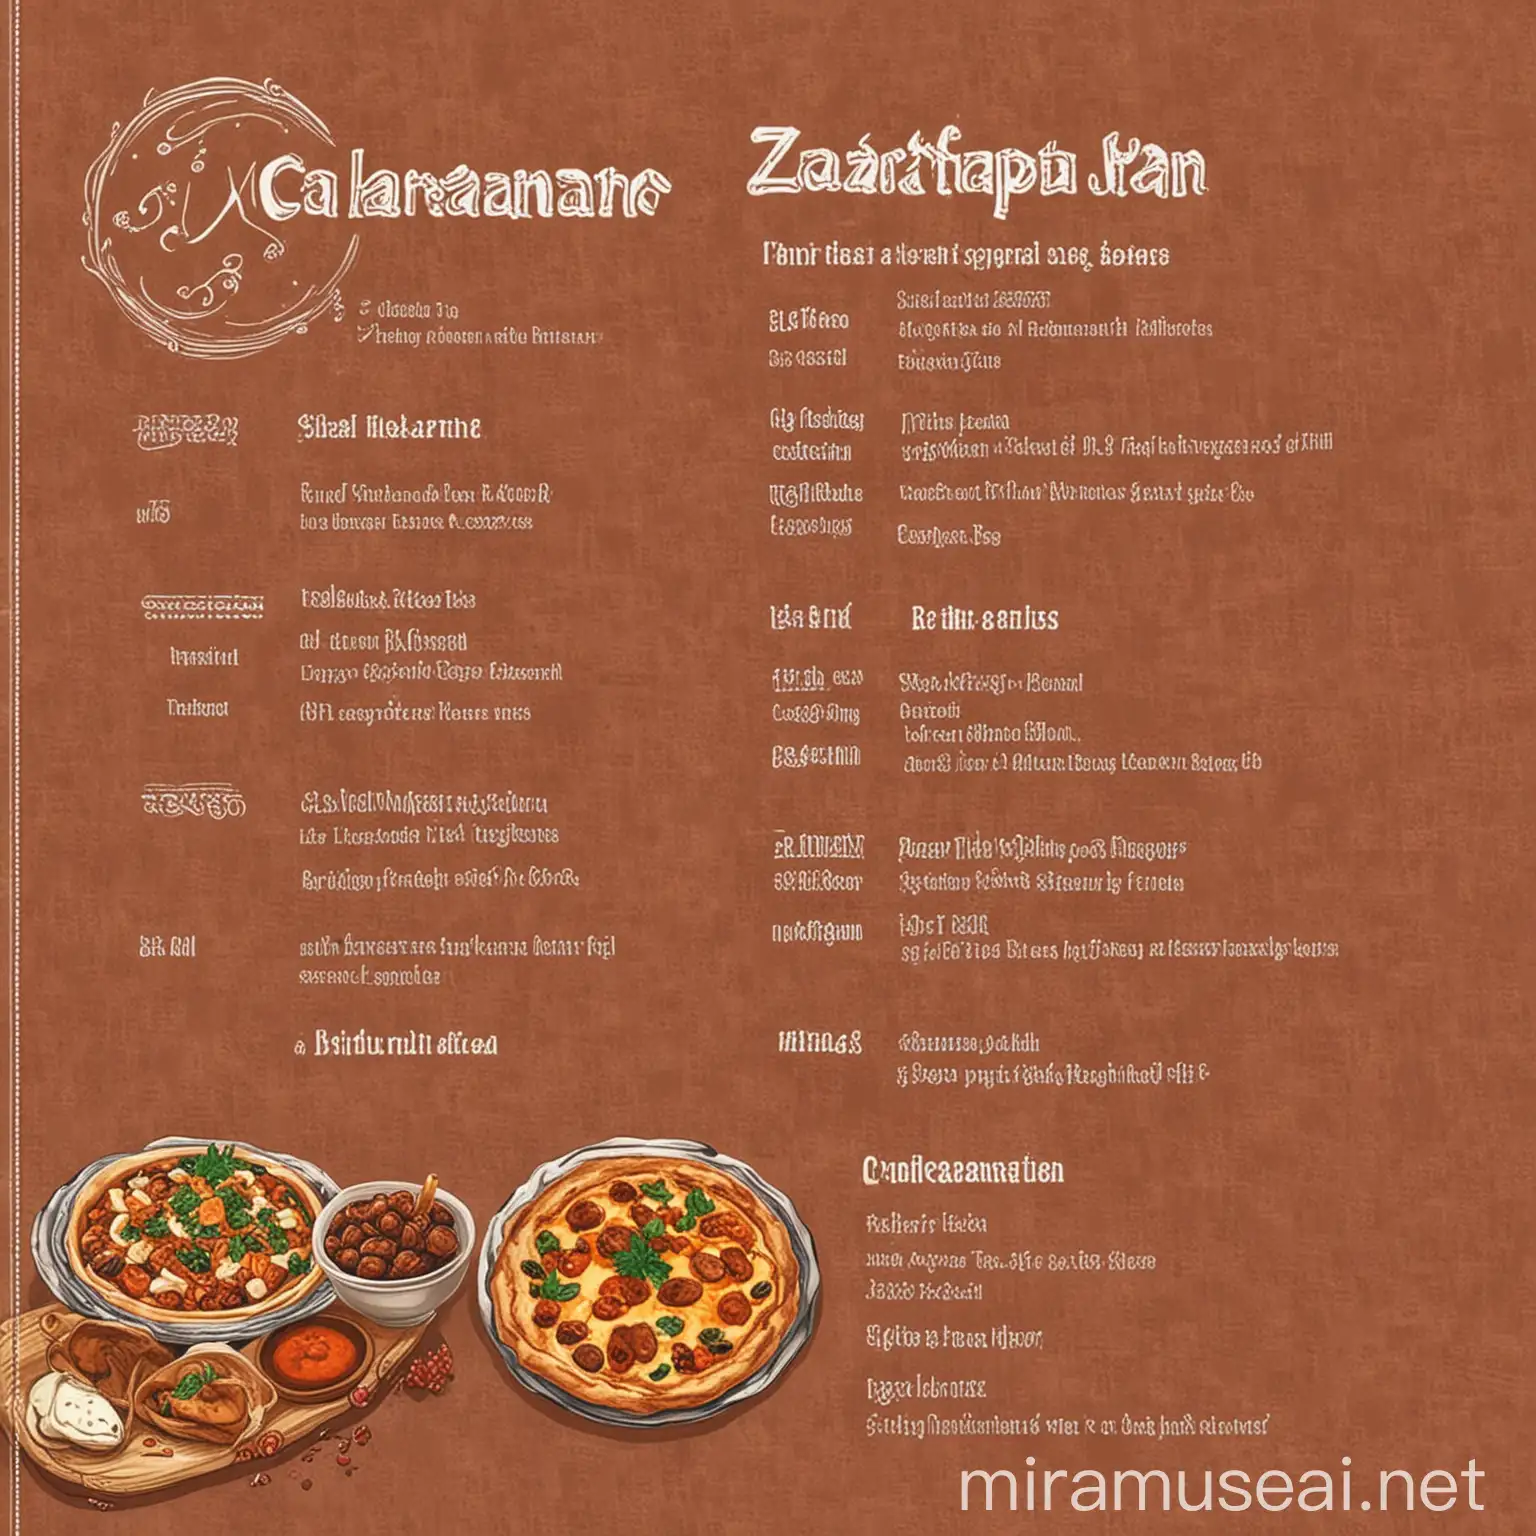 Zakarpatian Cuisine Menu Background Design Traditional Delicacies on Display